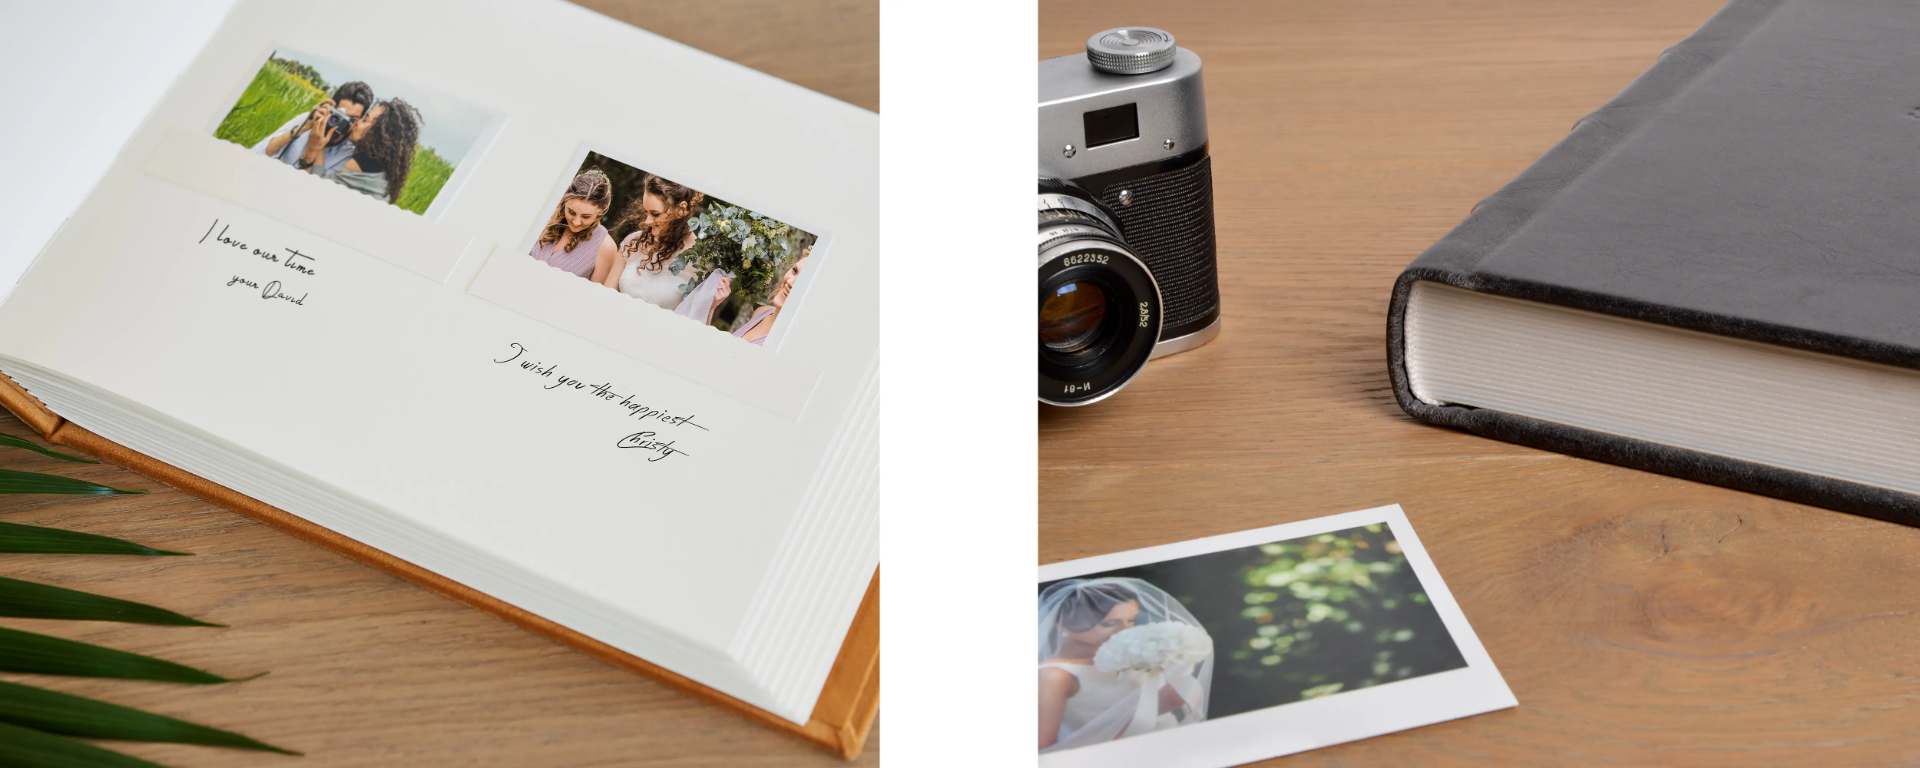 Luxury wedding photo albums, guest books, keepsake boxes - Arcoalbum. Slip  in Photo Albums 8x10